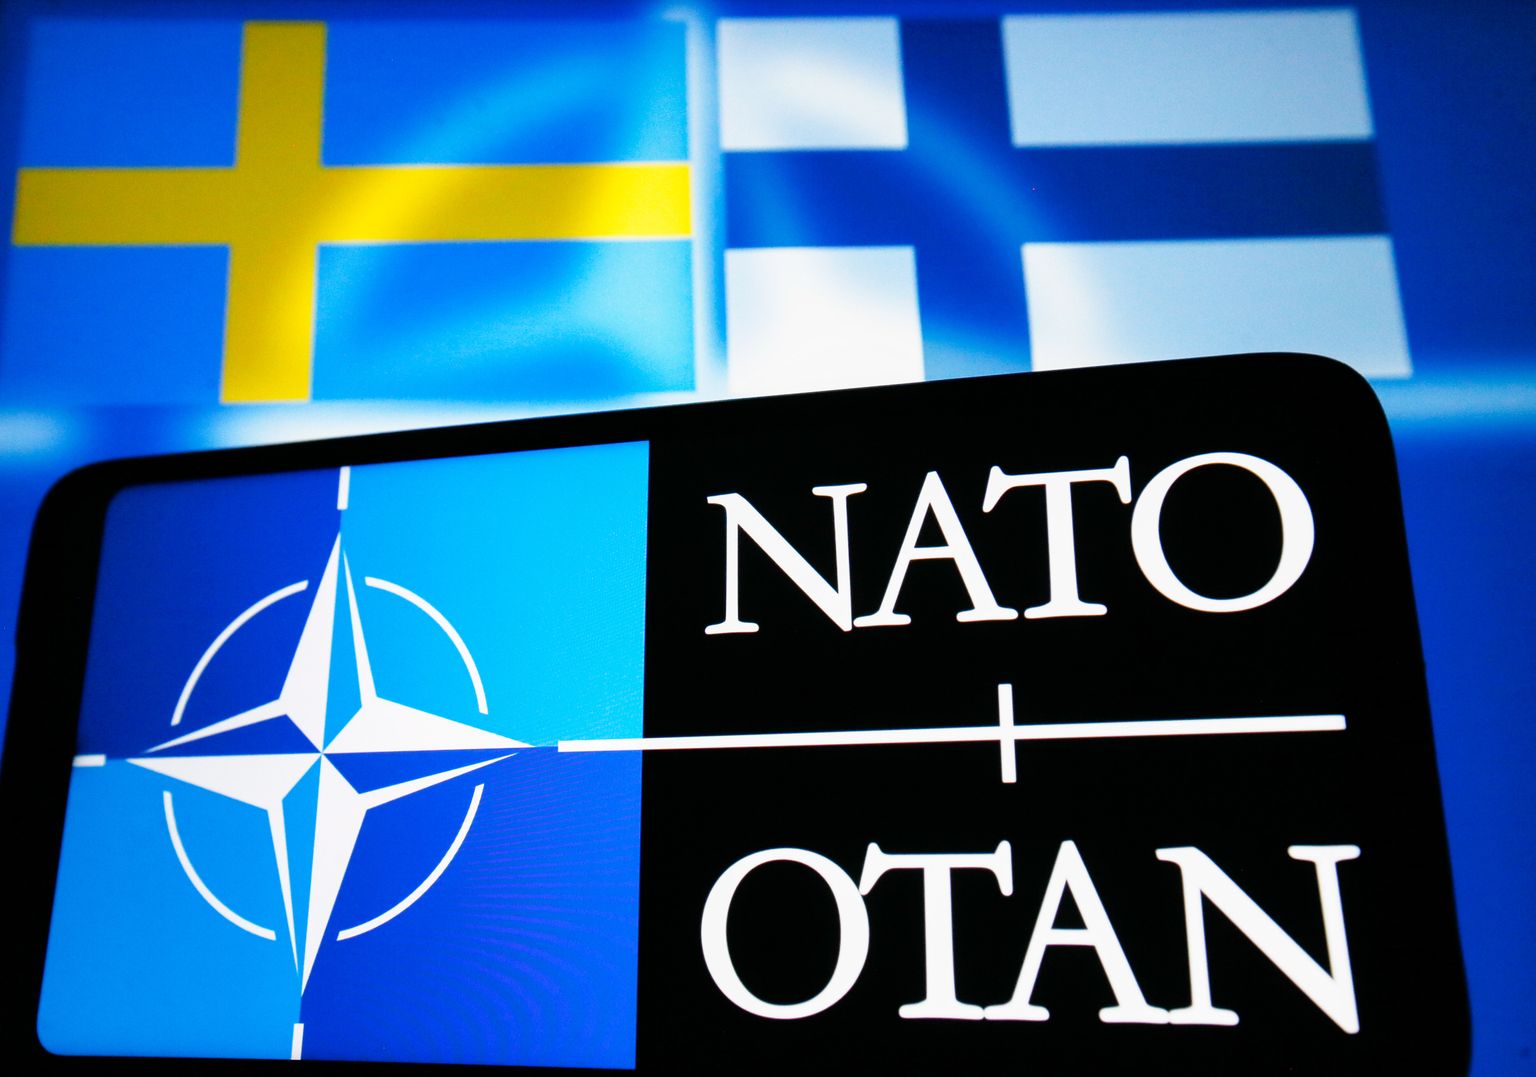 Soome ja Rootsi lipp ning NATO logo. Foto on illustratiivne.